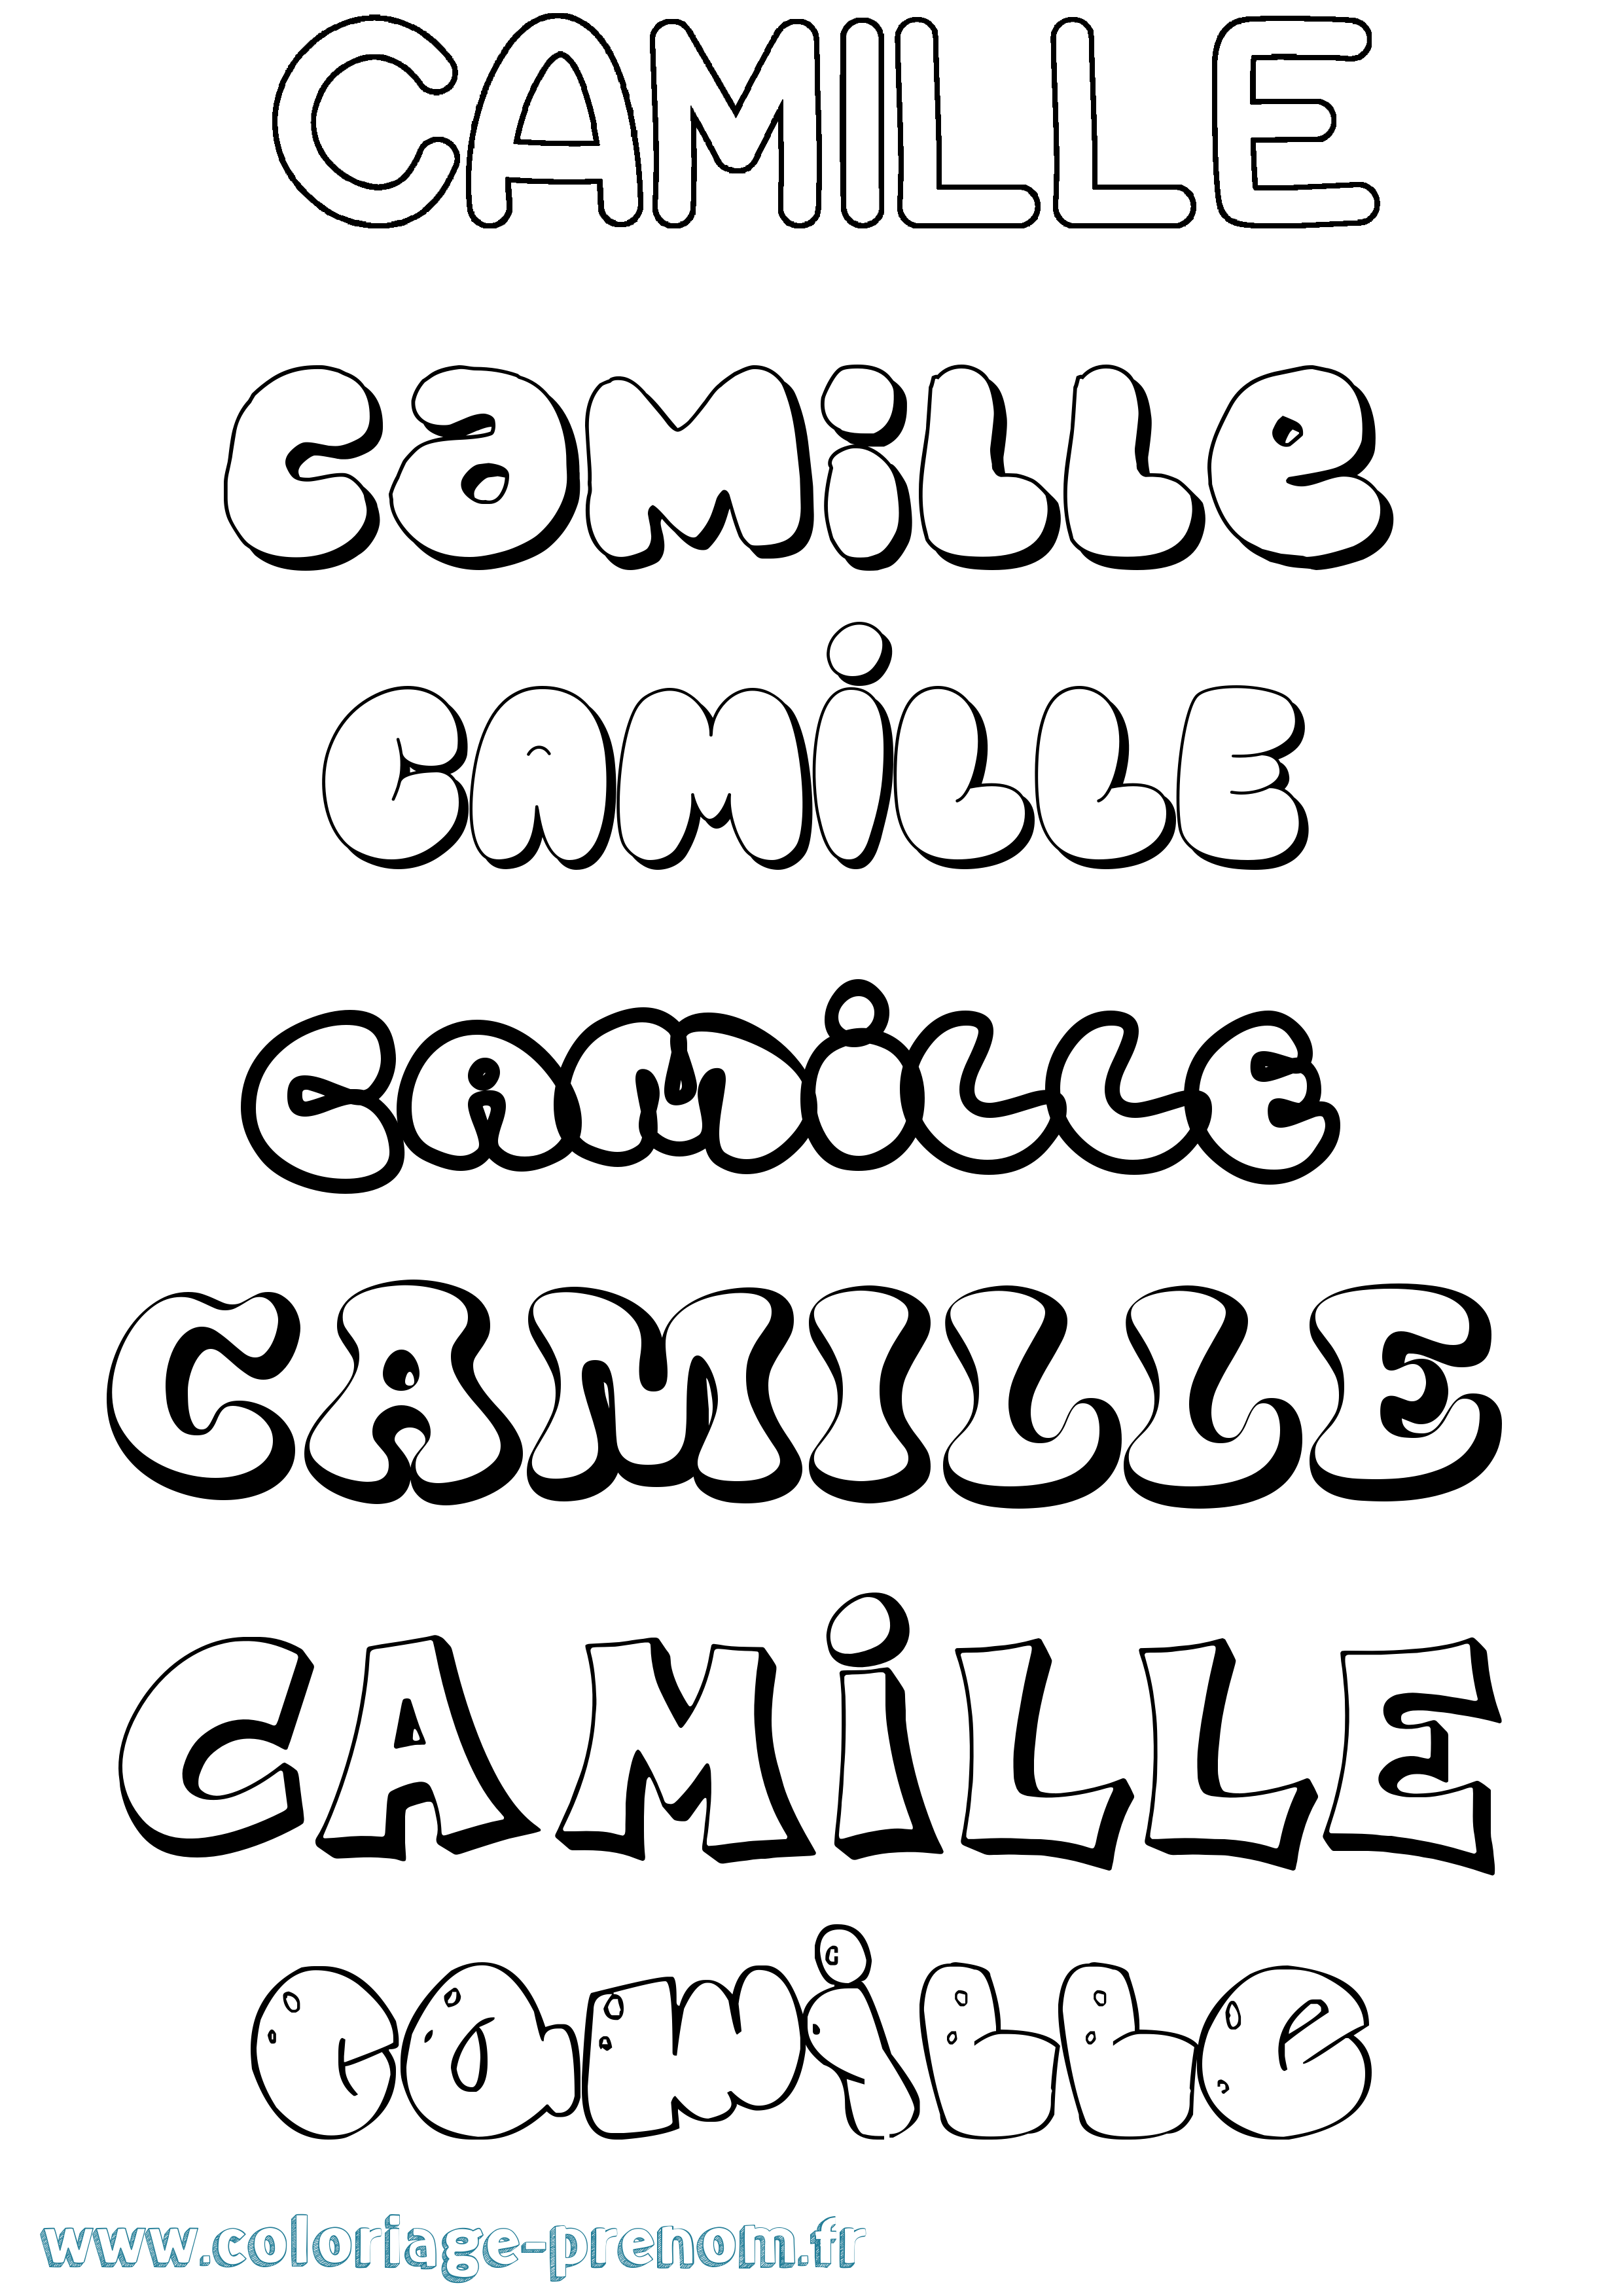 Coloriage prénom Camille